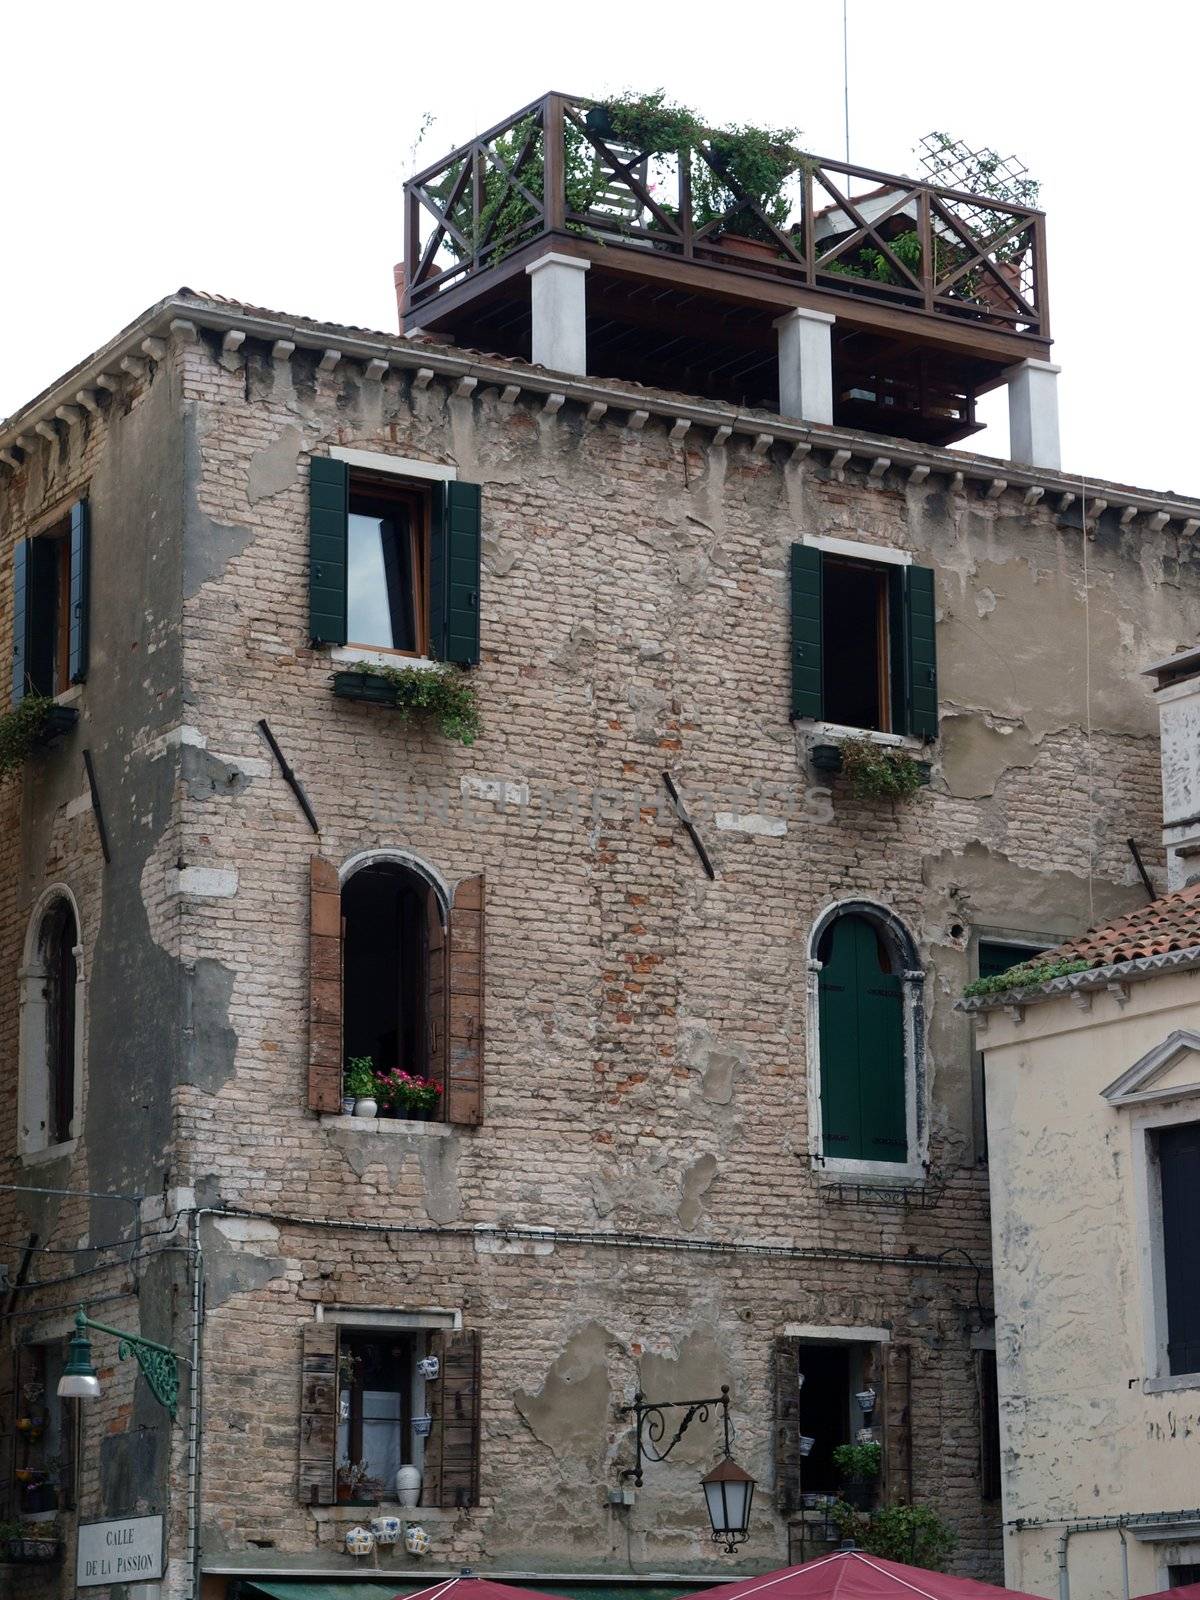 Old venetian building - Venice Italy